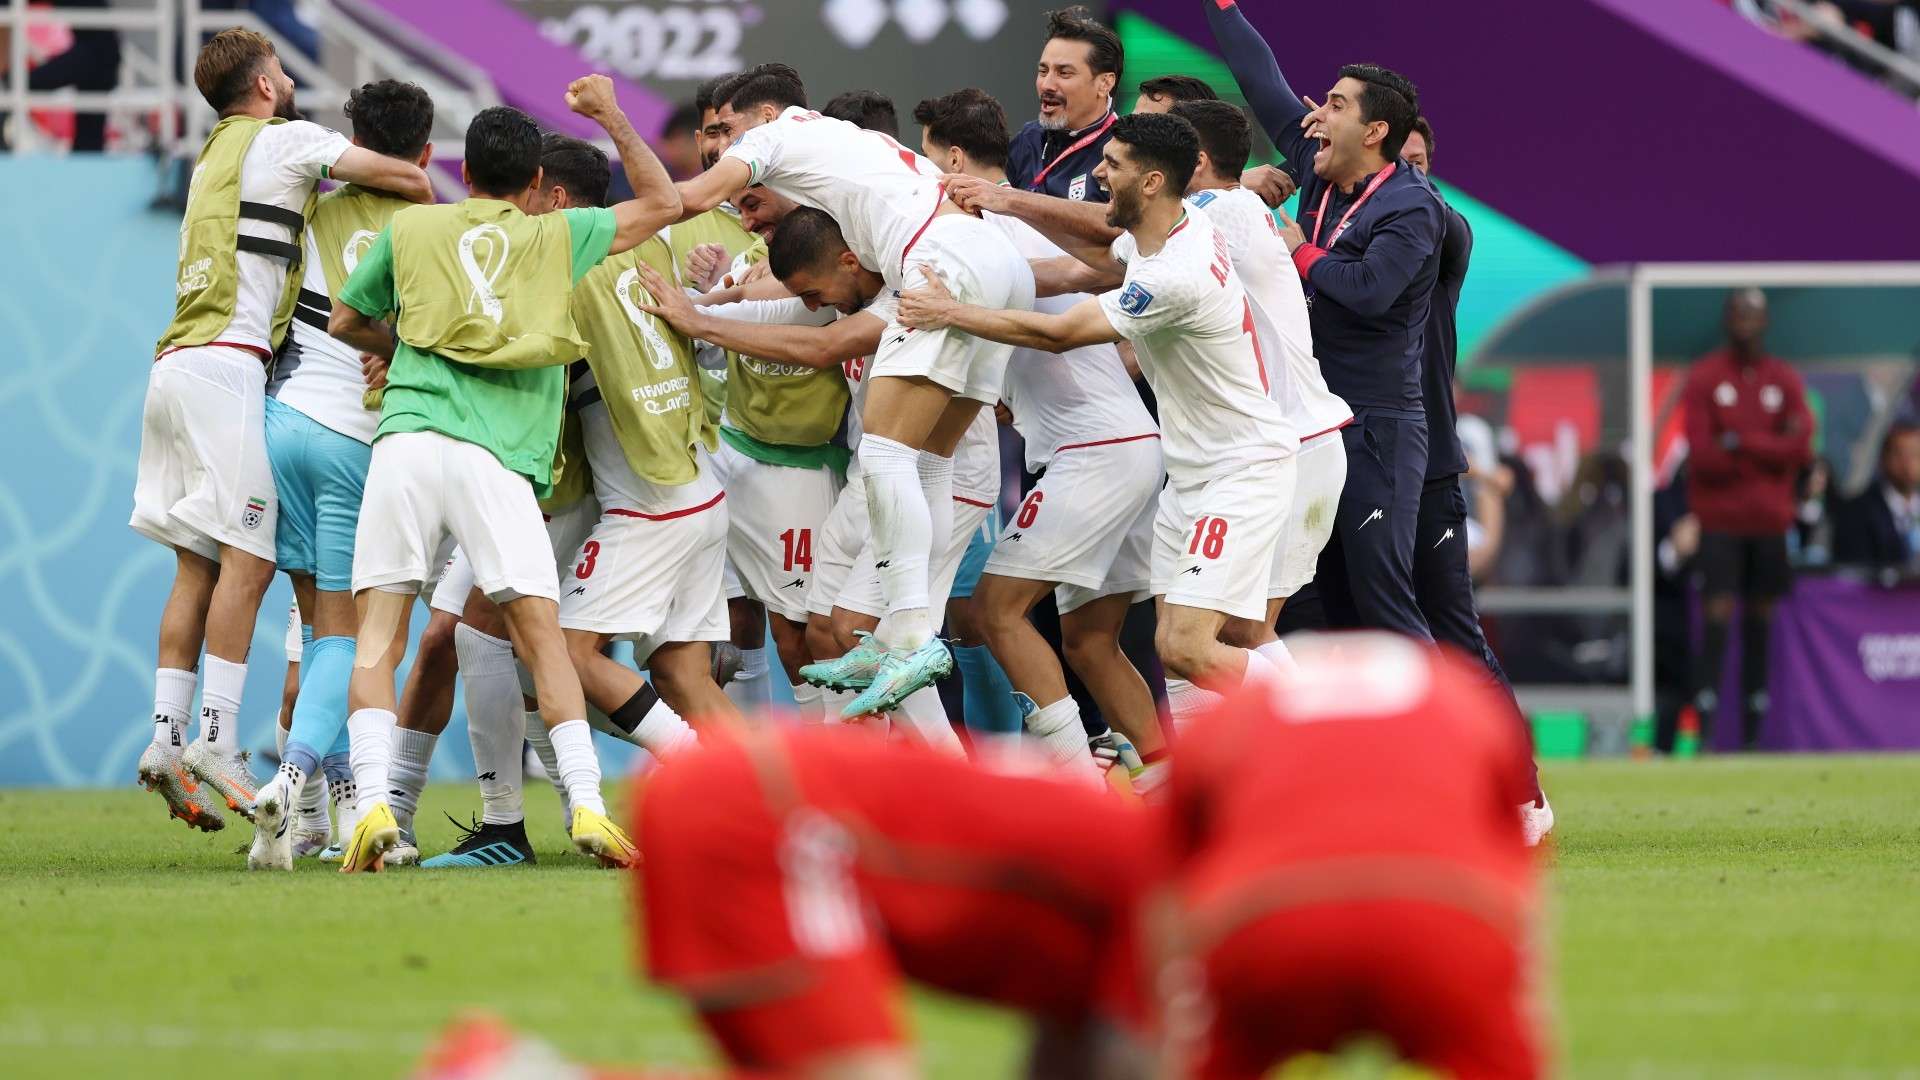 Iran Wales goal 2022 World Cup